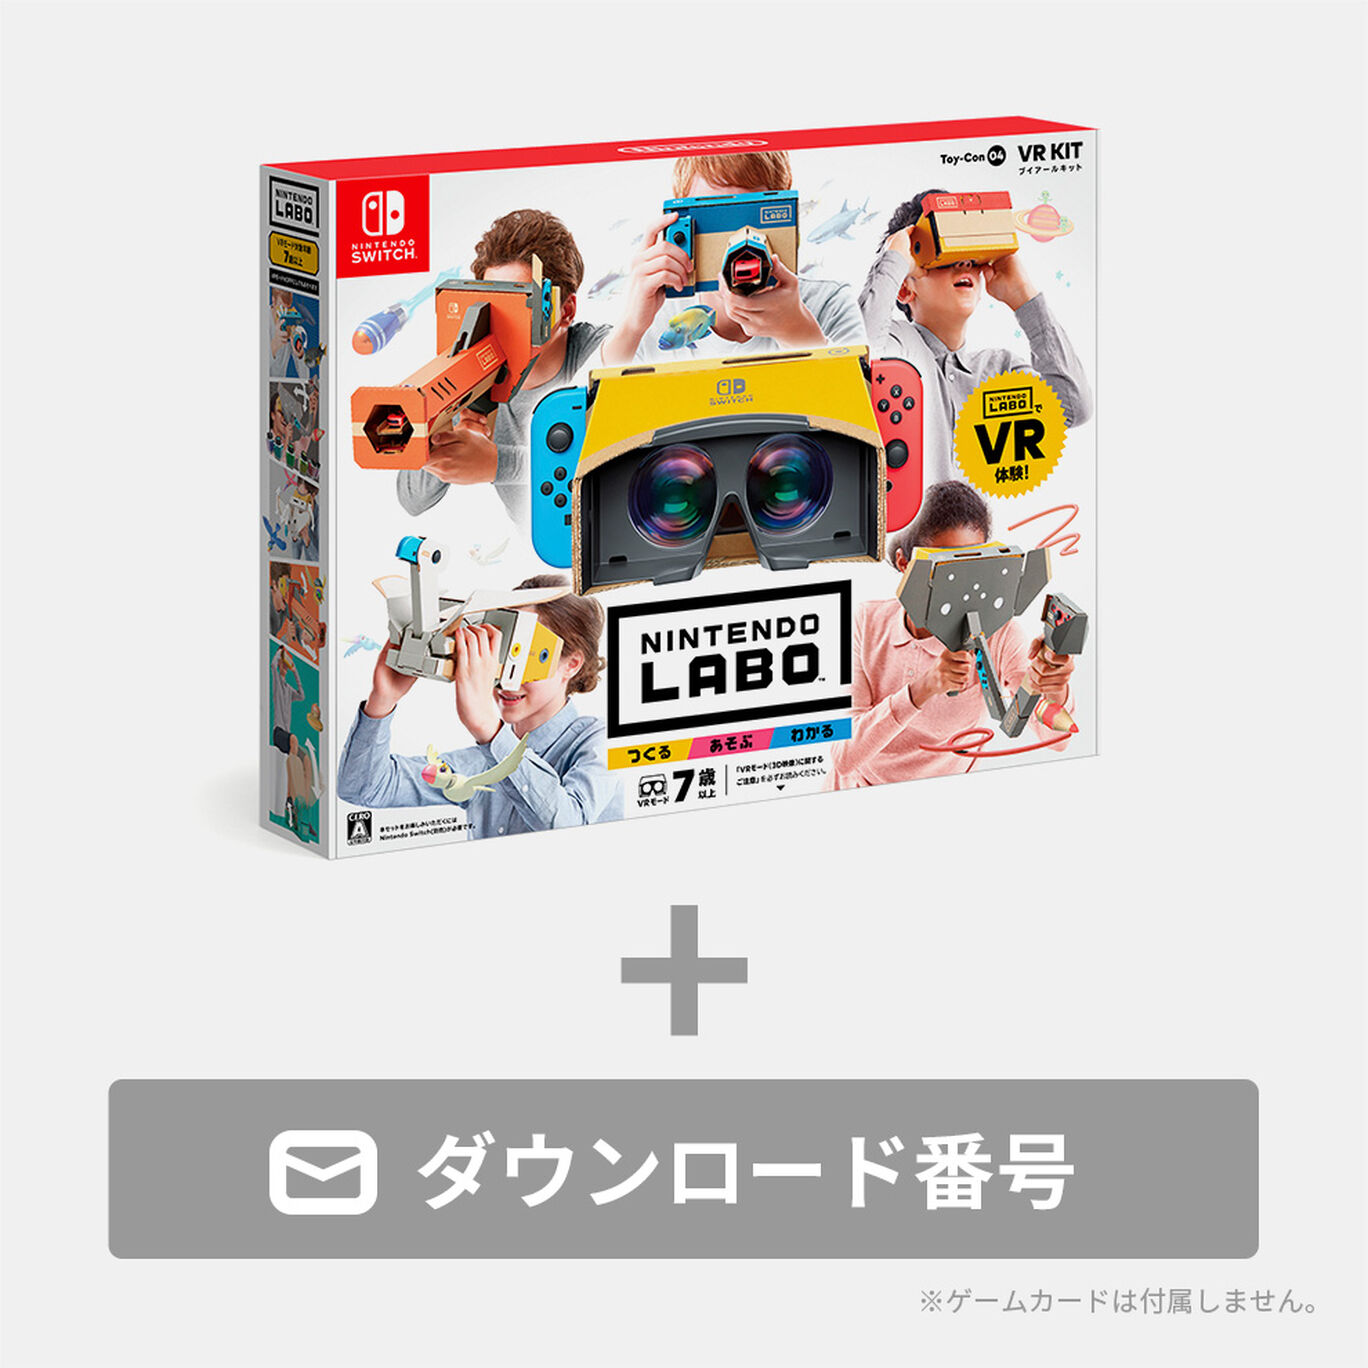 Nintendo Labo Toy-Con 04: VR Kit ダウンロード版